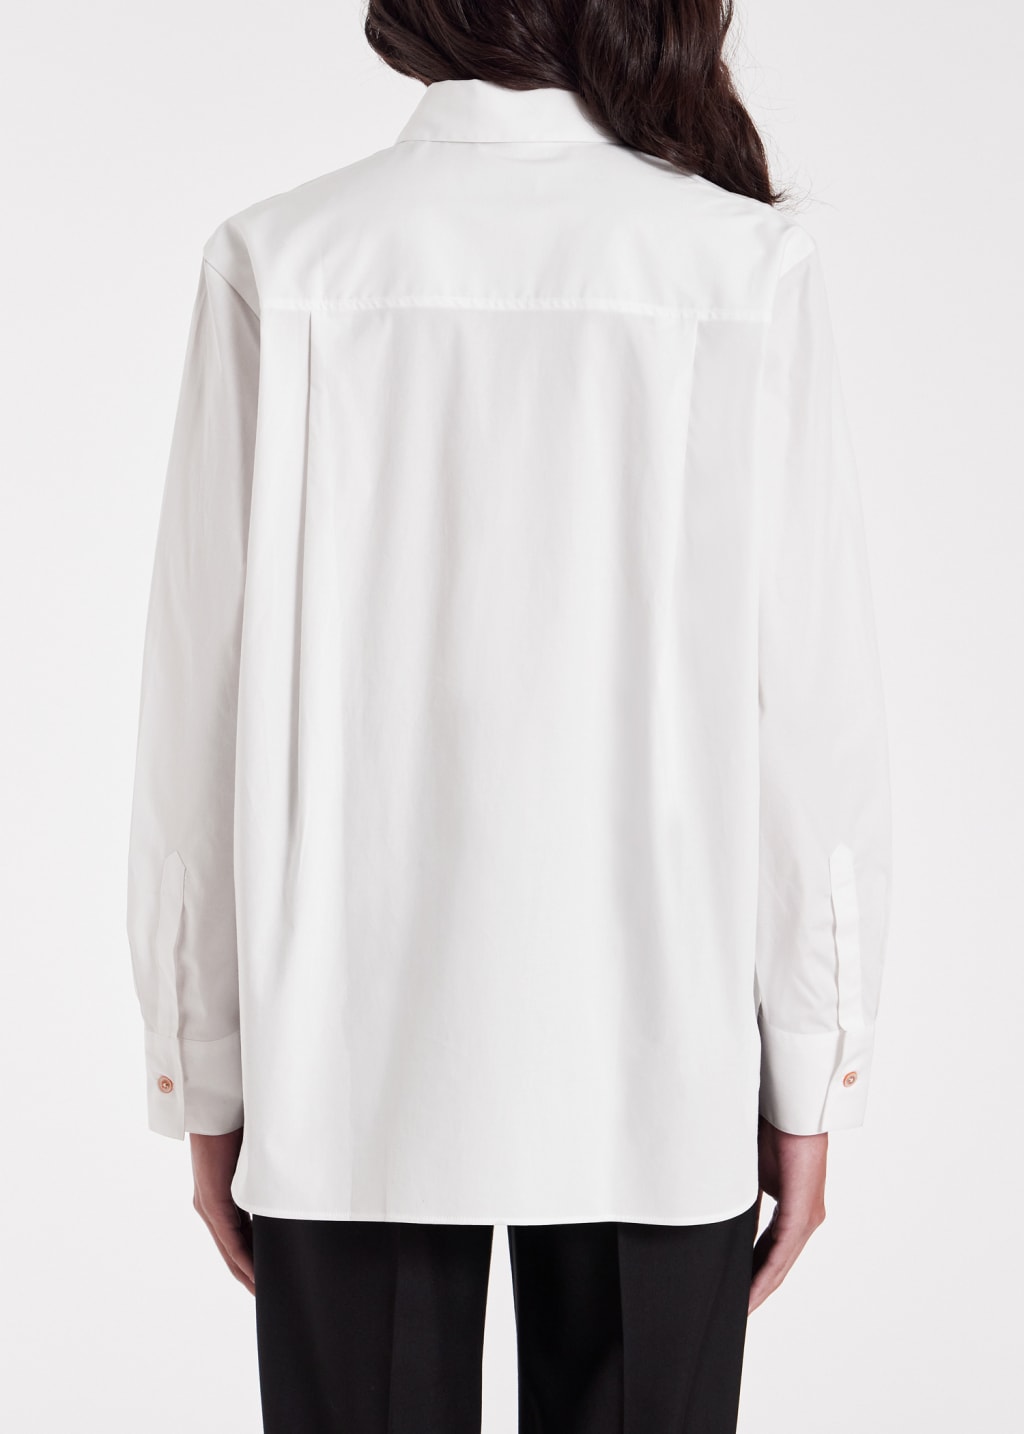 Model View - Women's White Cotton Multi Coloured Button Shirt by Paul Smith